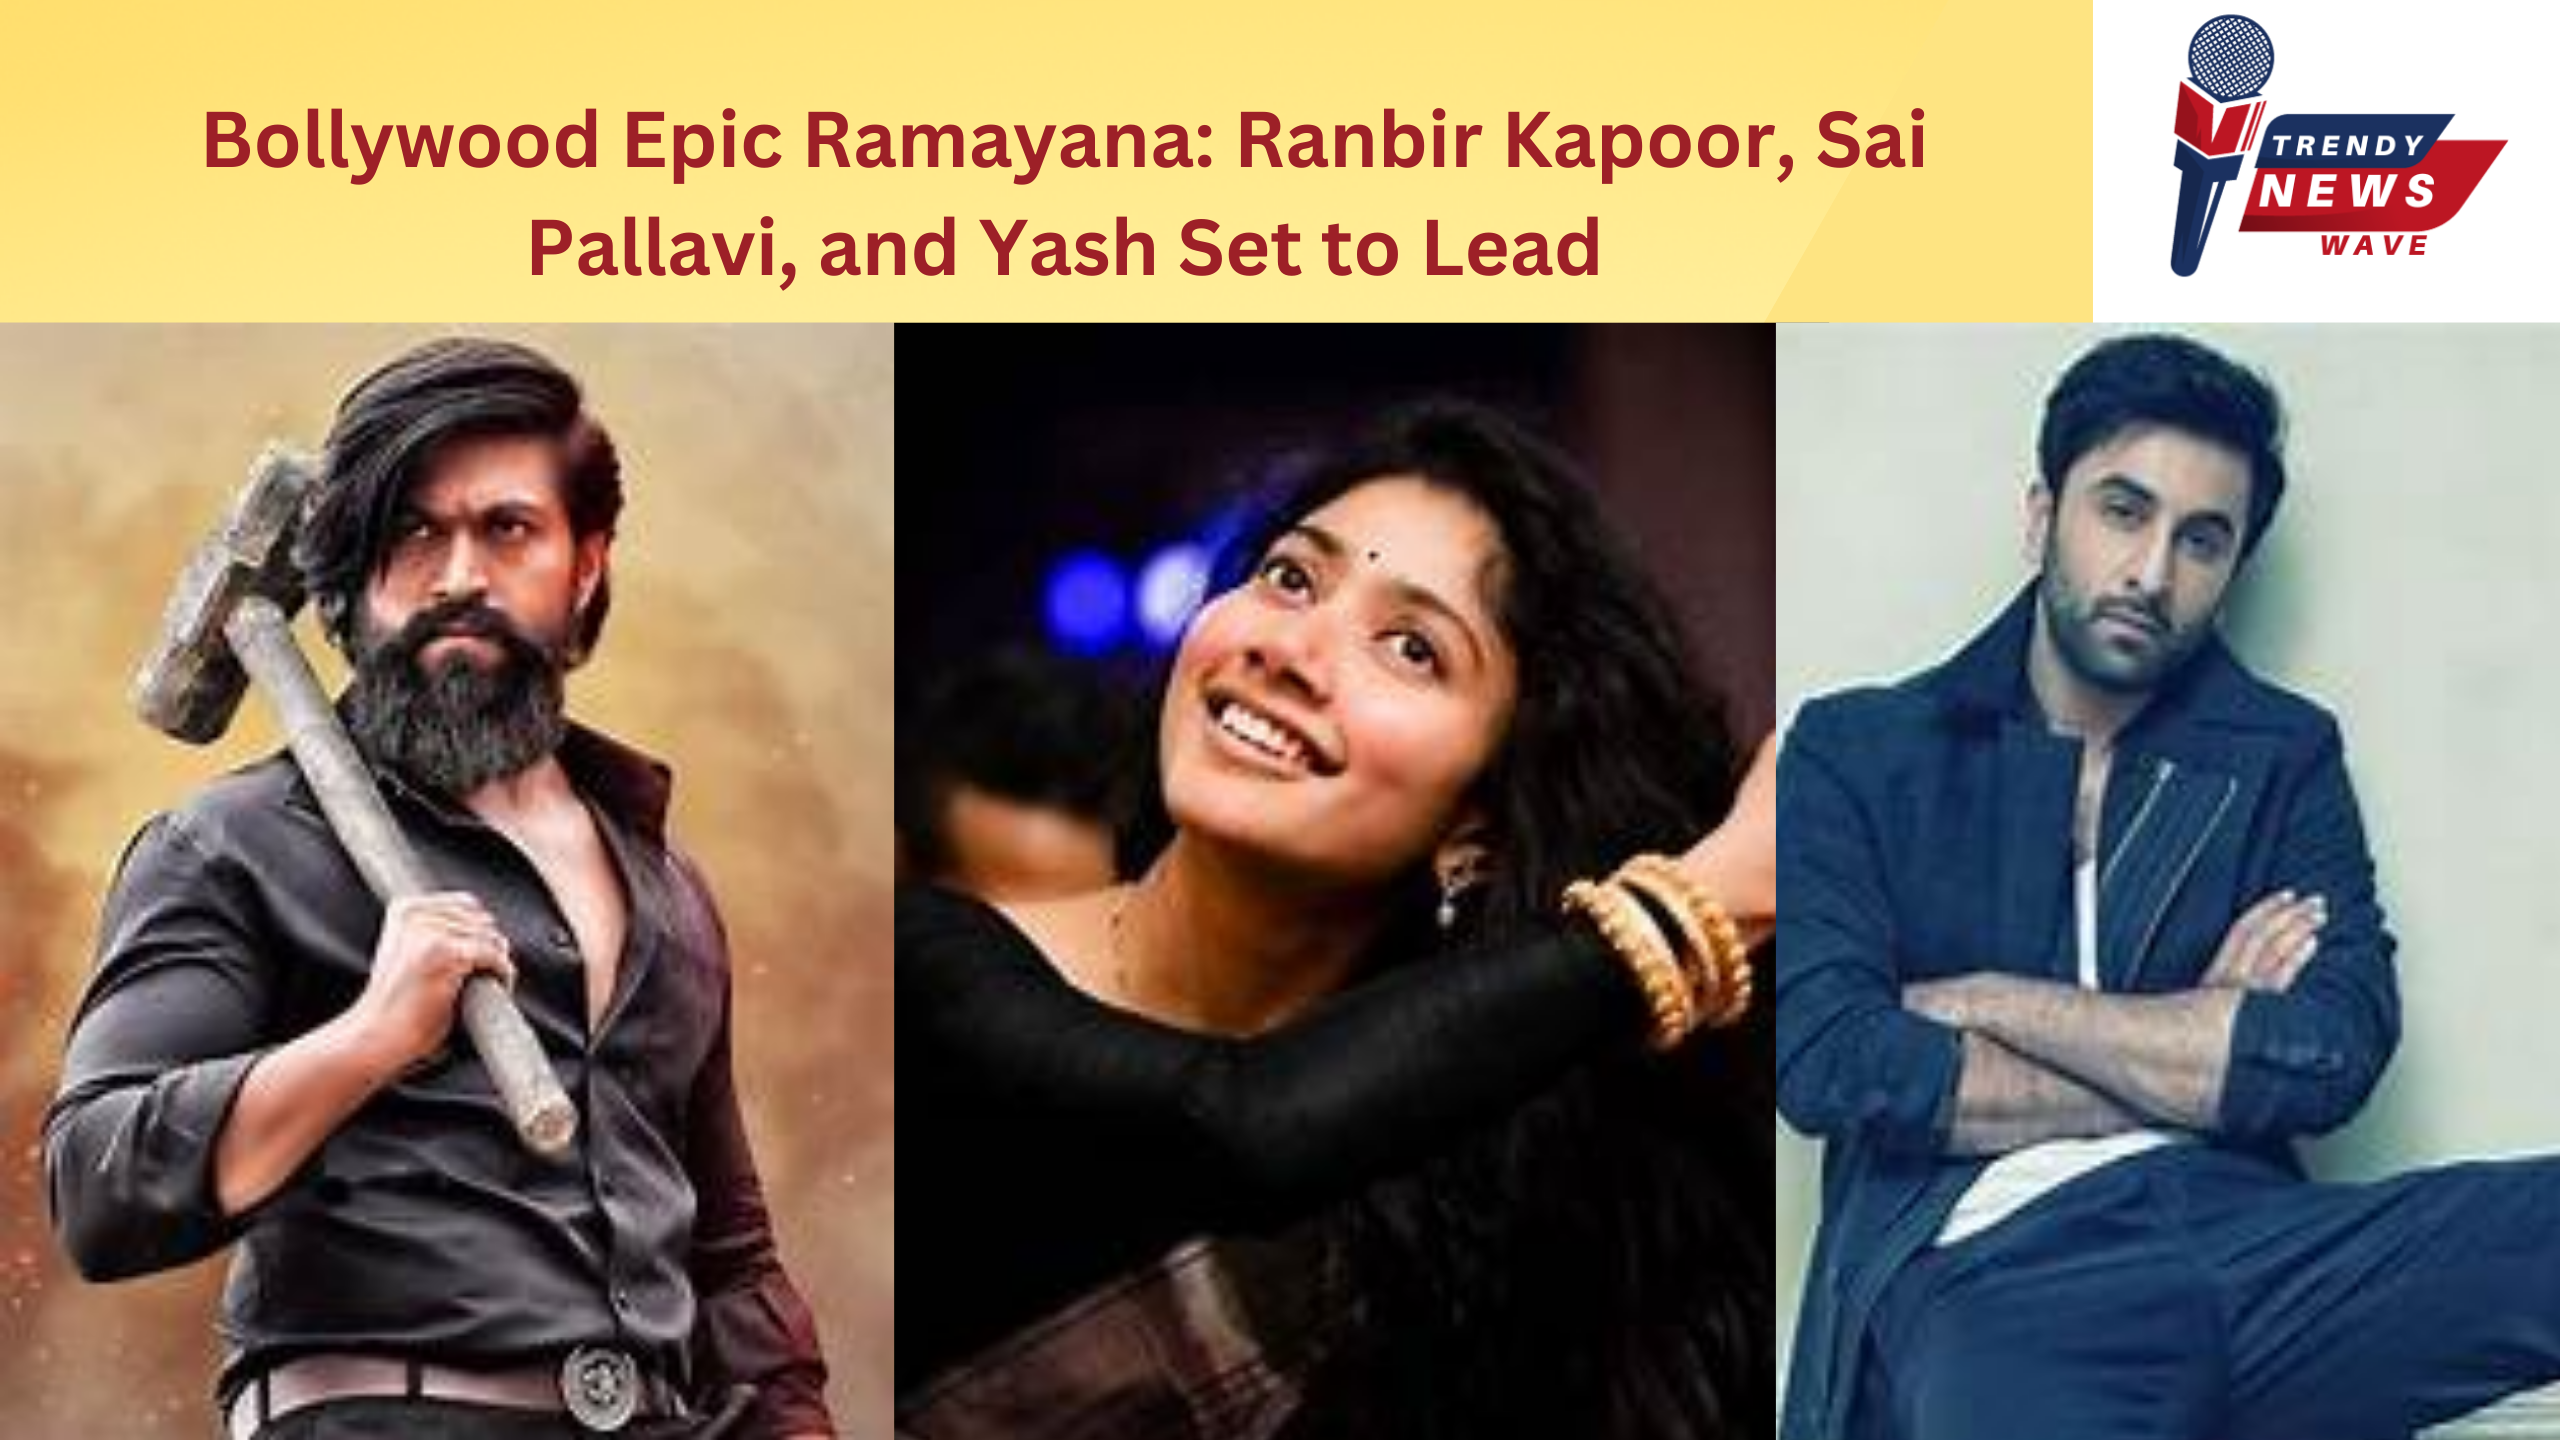 Bollywood Epic Ramayana: Ranbir Kapoor, Sai Pallavi, and Yash Set to Lead